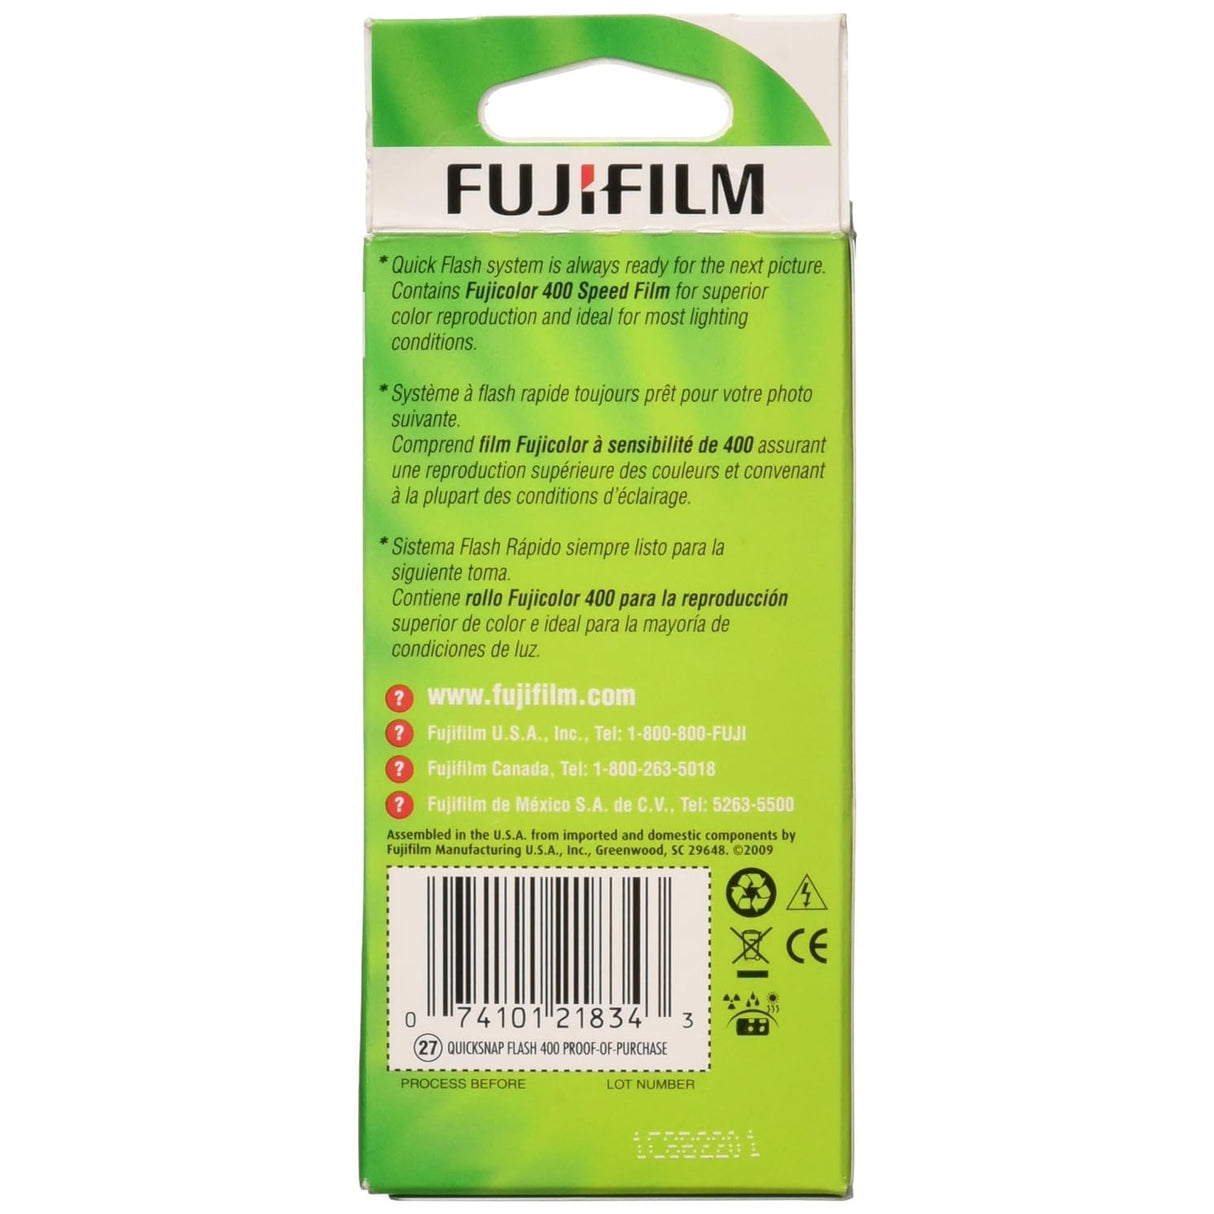 FUJIFILM QuickSnap Flash 400 One-Time-Use Disposable Camera (27 Exposures)